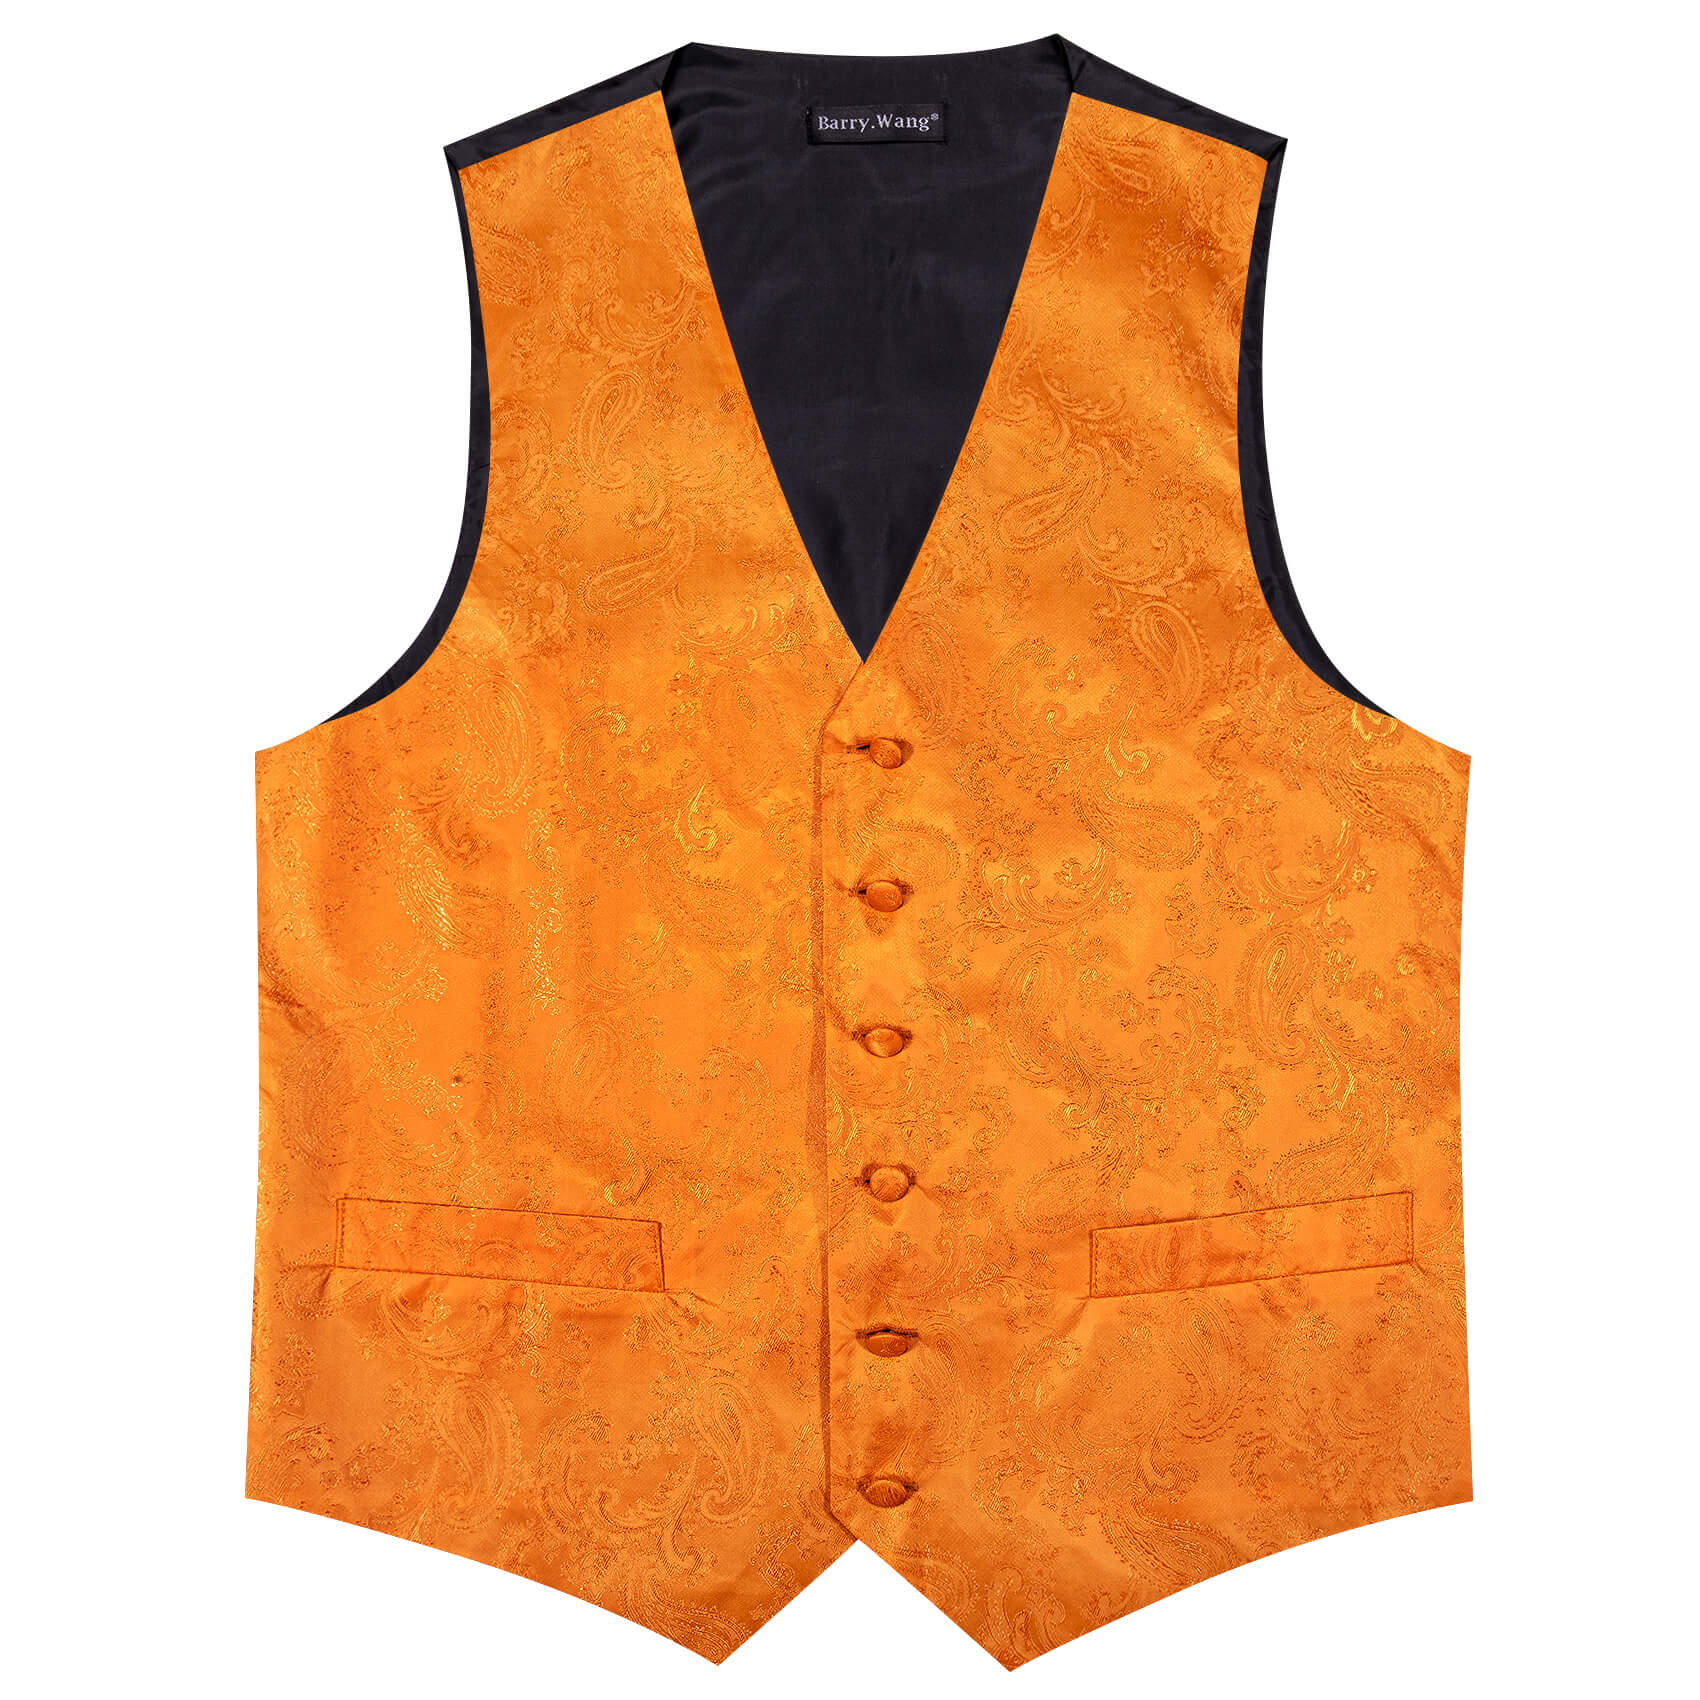 Barry Wang 5pcs Mens Waistcoat Set Orange Paisley Vest